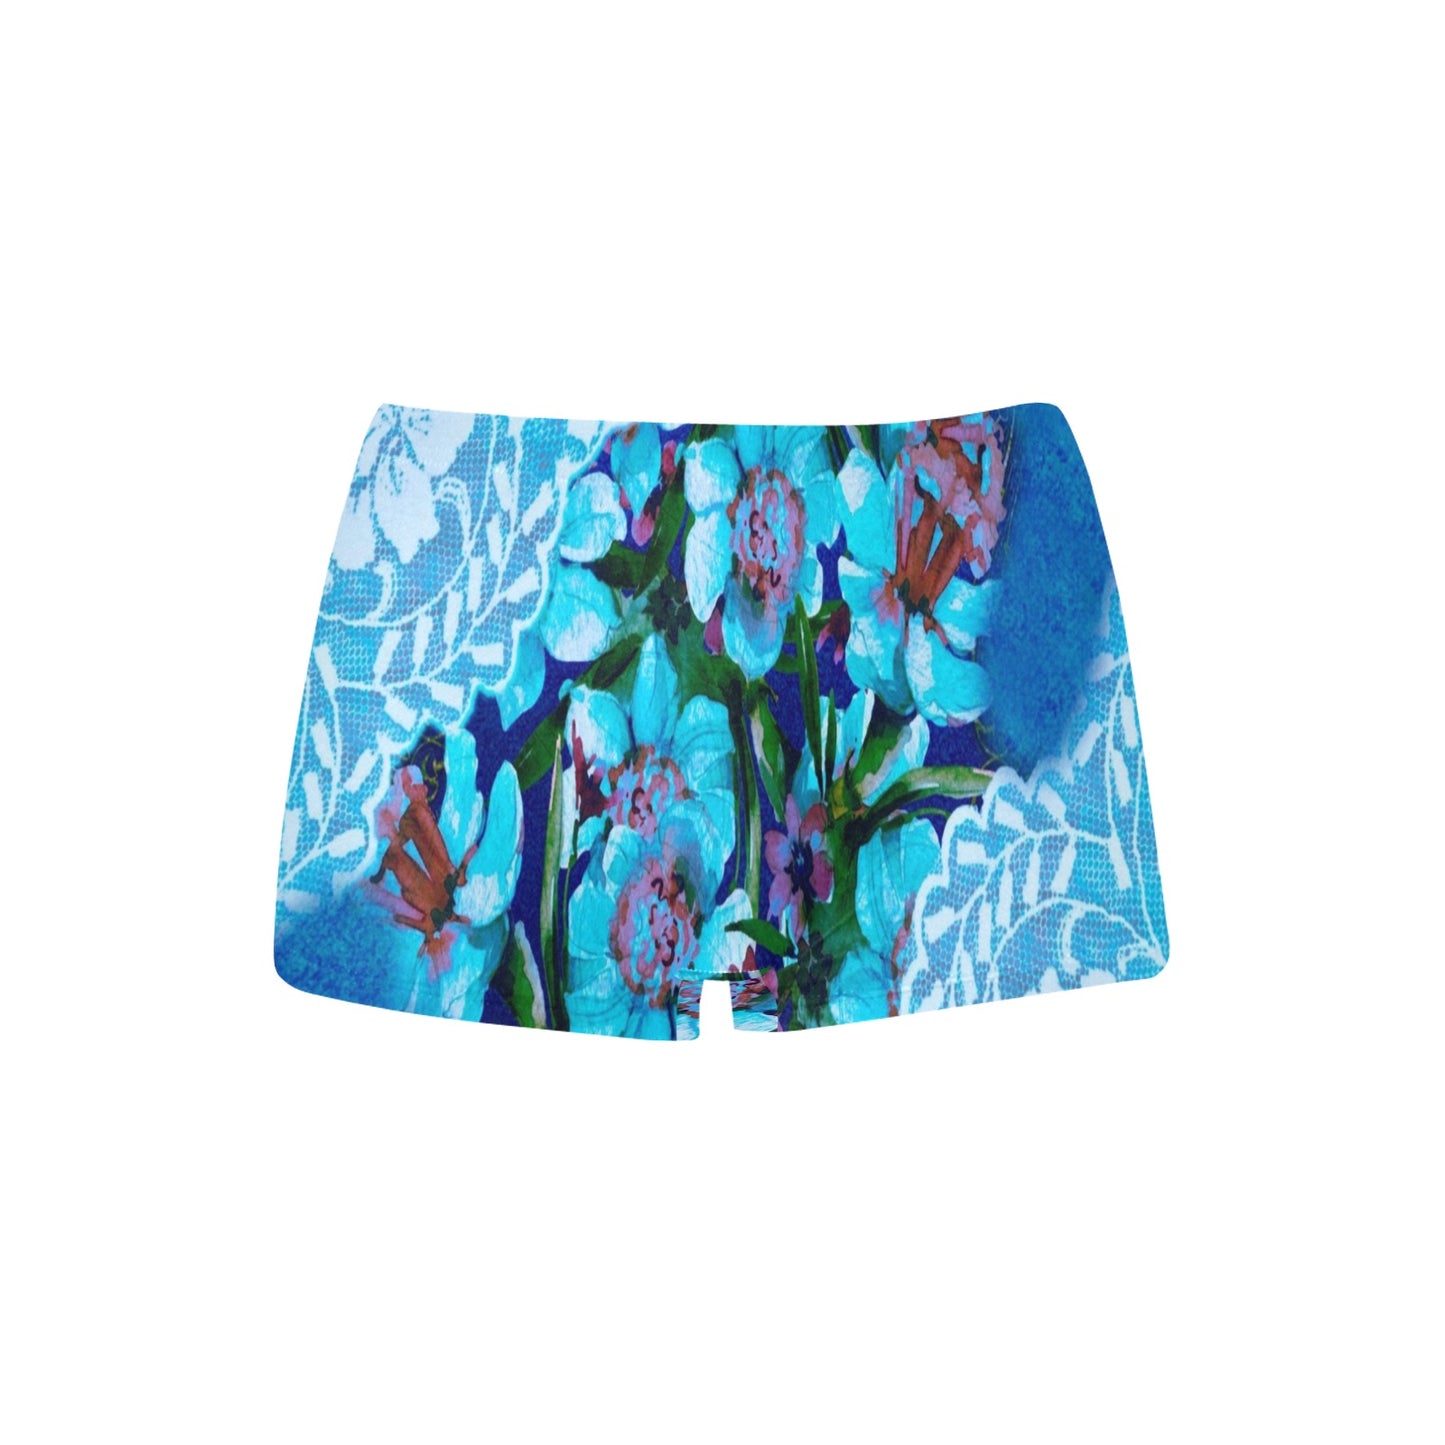 Printed Lace Boyshorts, daisy dukes, pum pum shorts, shortie shorts , design 49